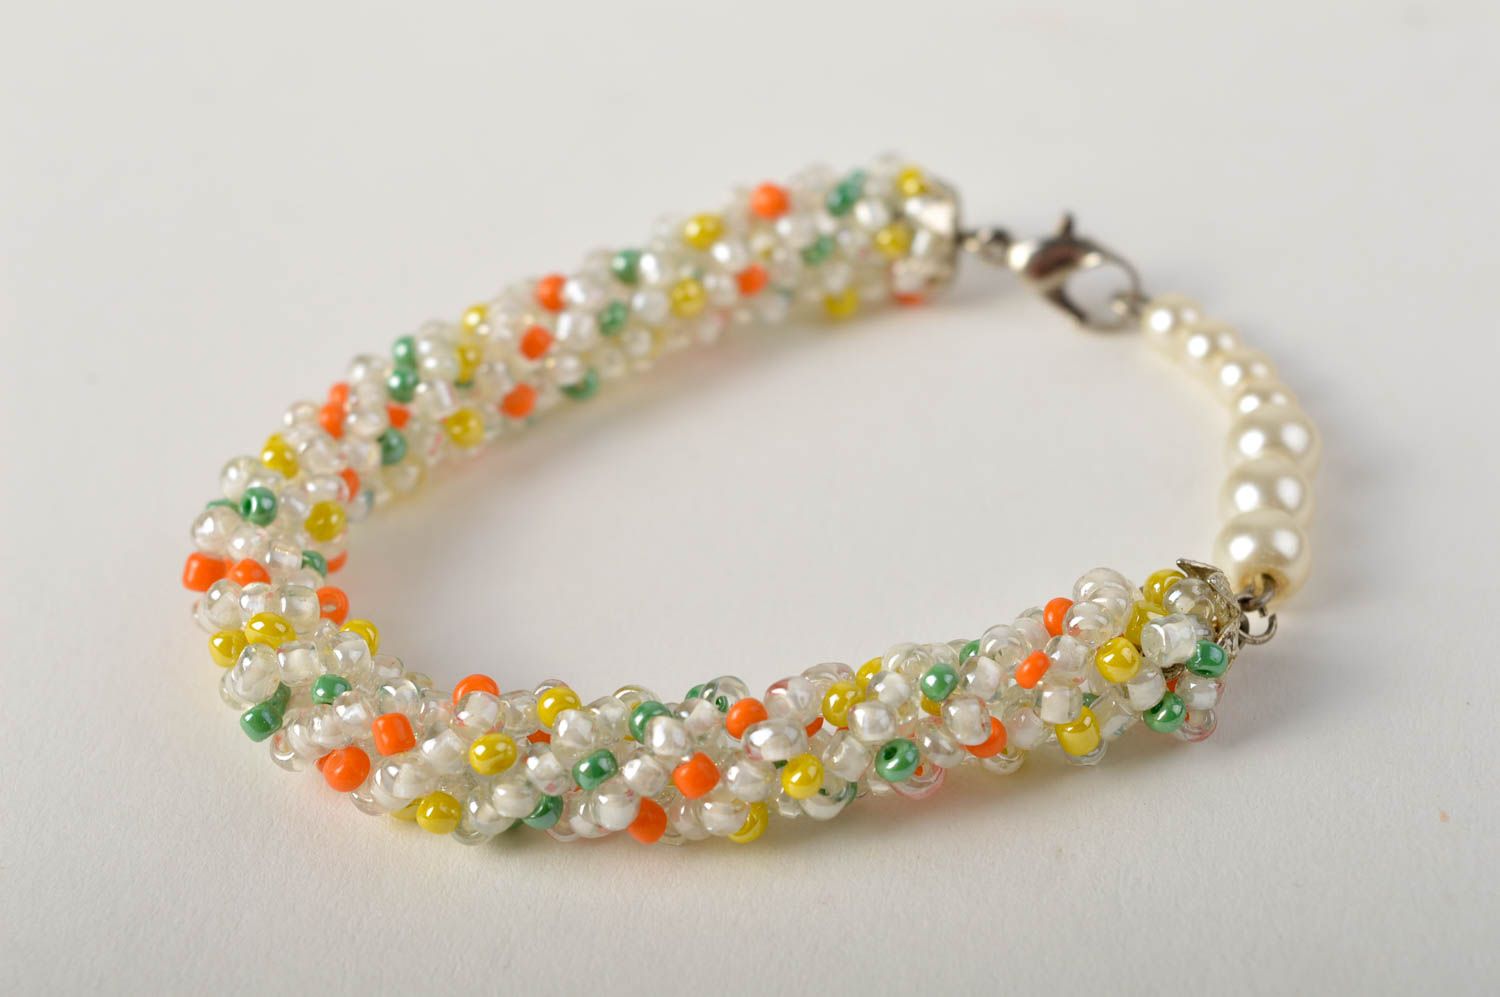 Unusual handmadewrist bracelet bead weaving beaded cord bracelet gifts for her photo 4